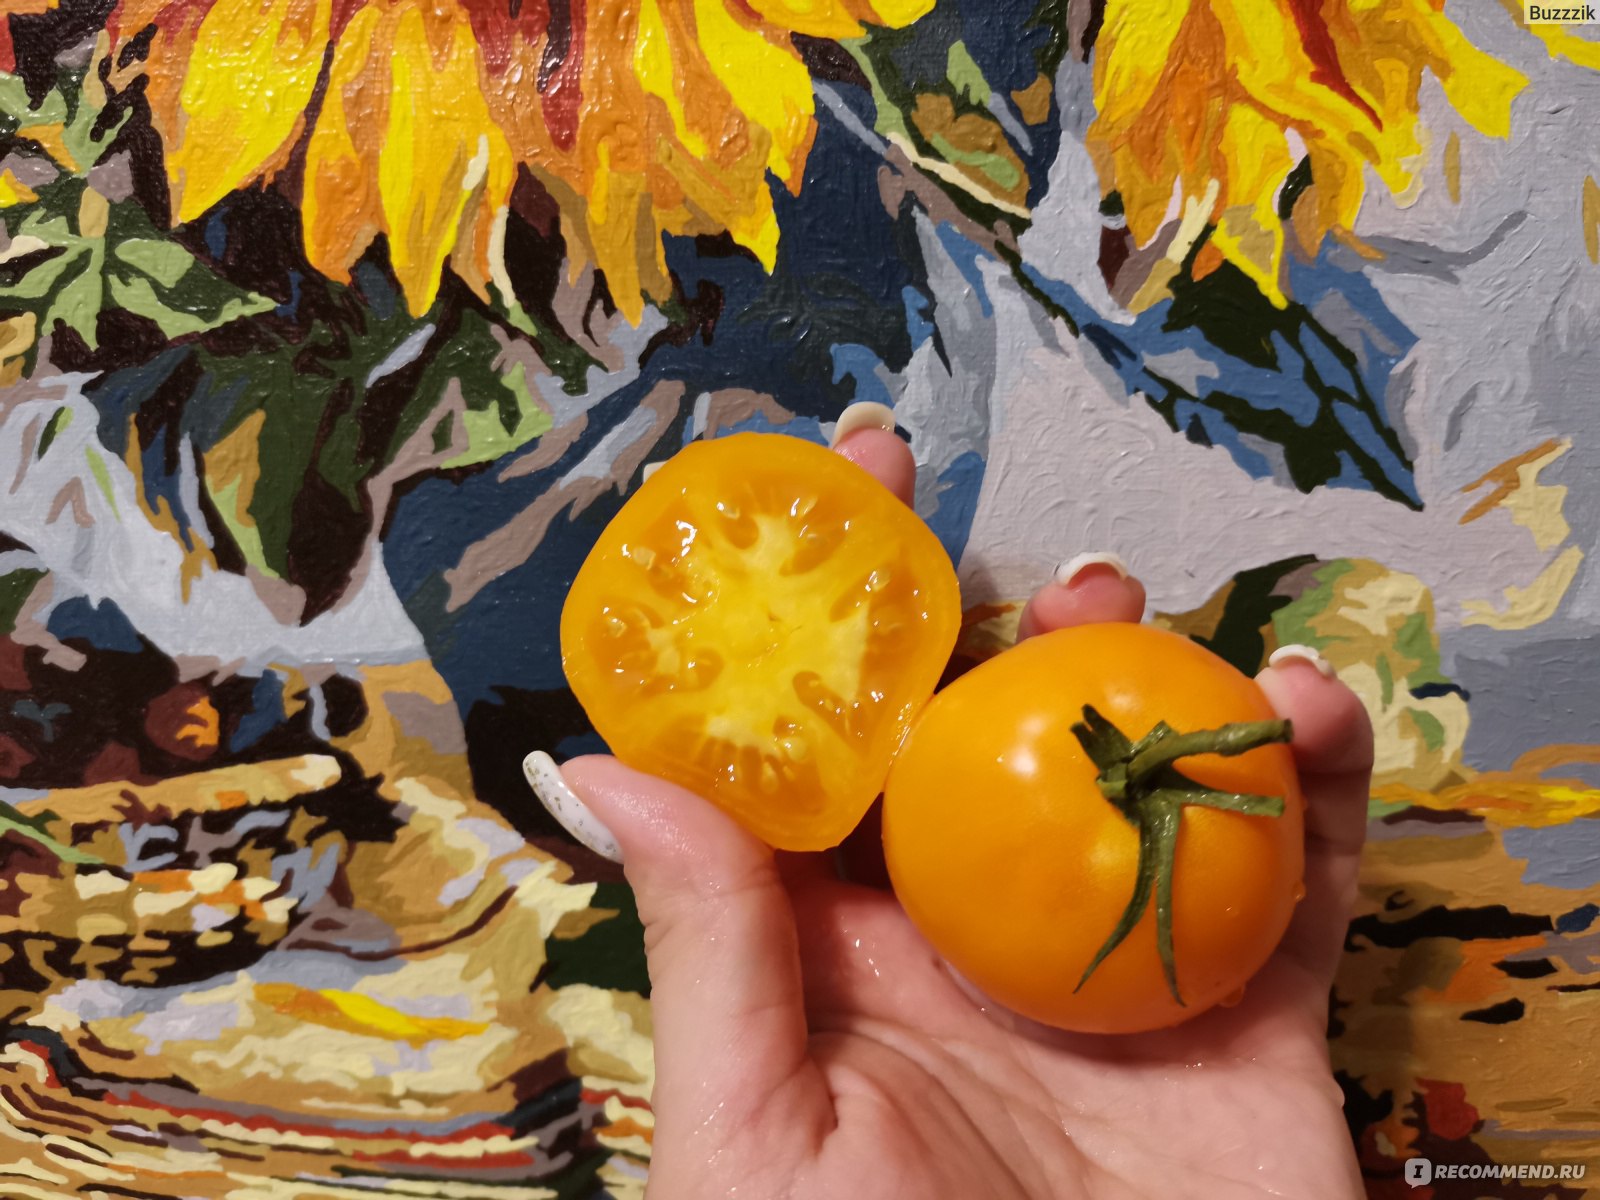 Семена Гавриш - Томат "Апельсин"  фото